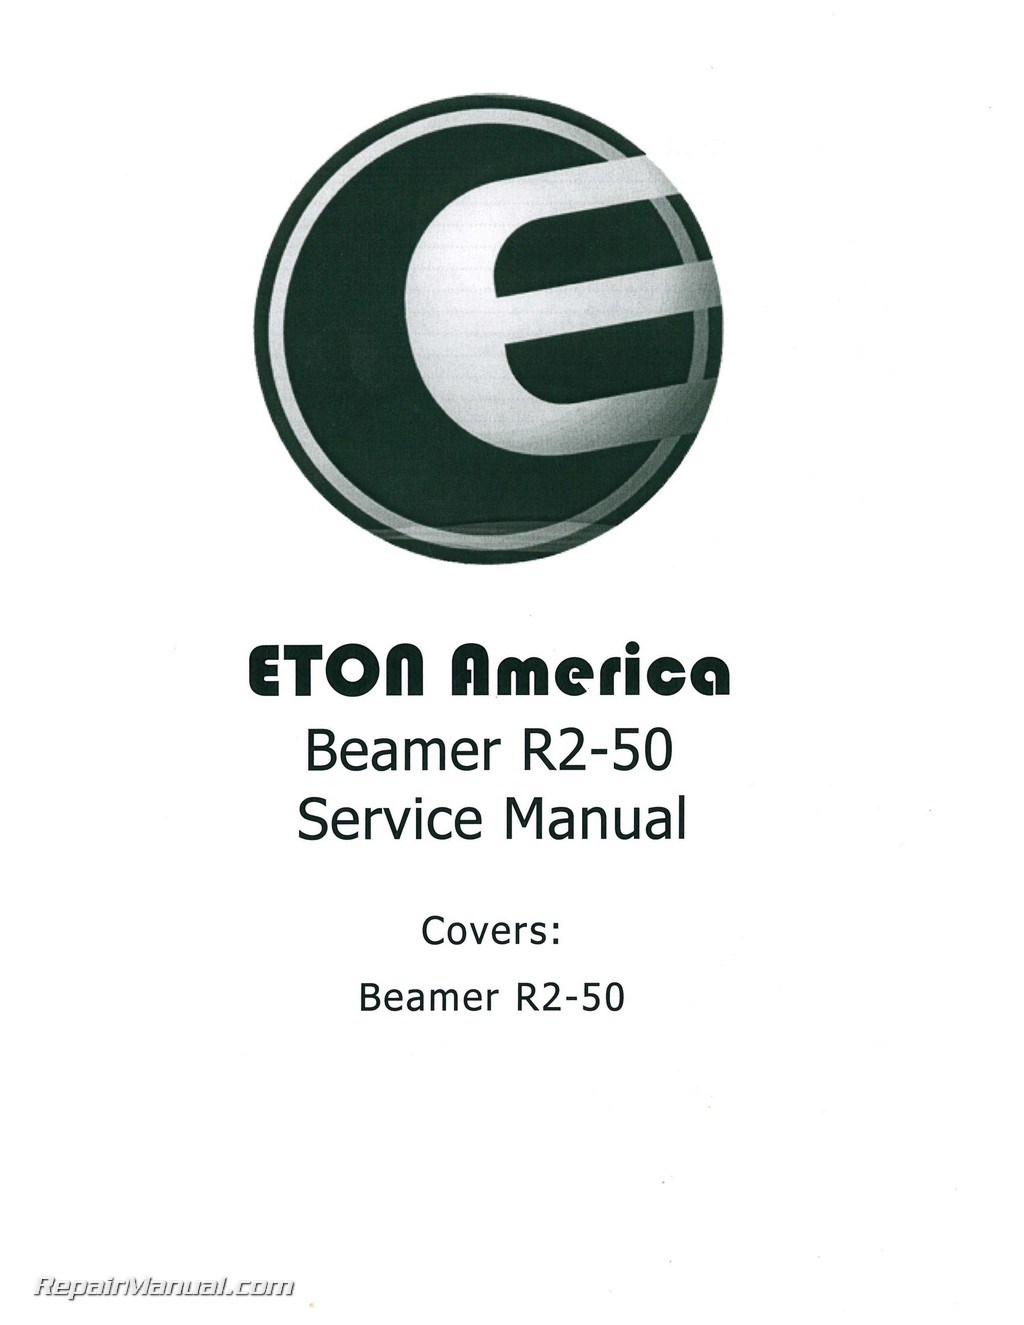 Picture of: Eton Beamer R- Service Manual